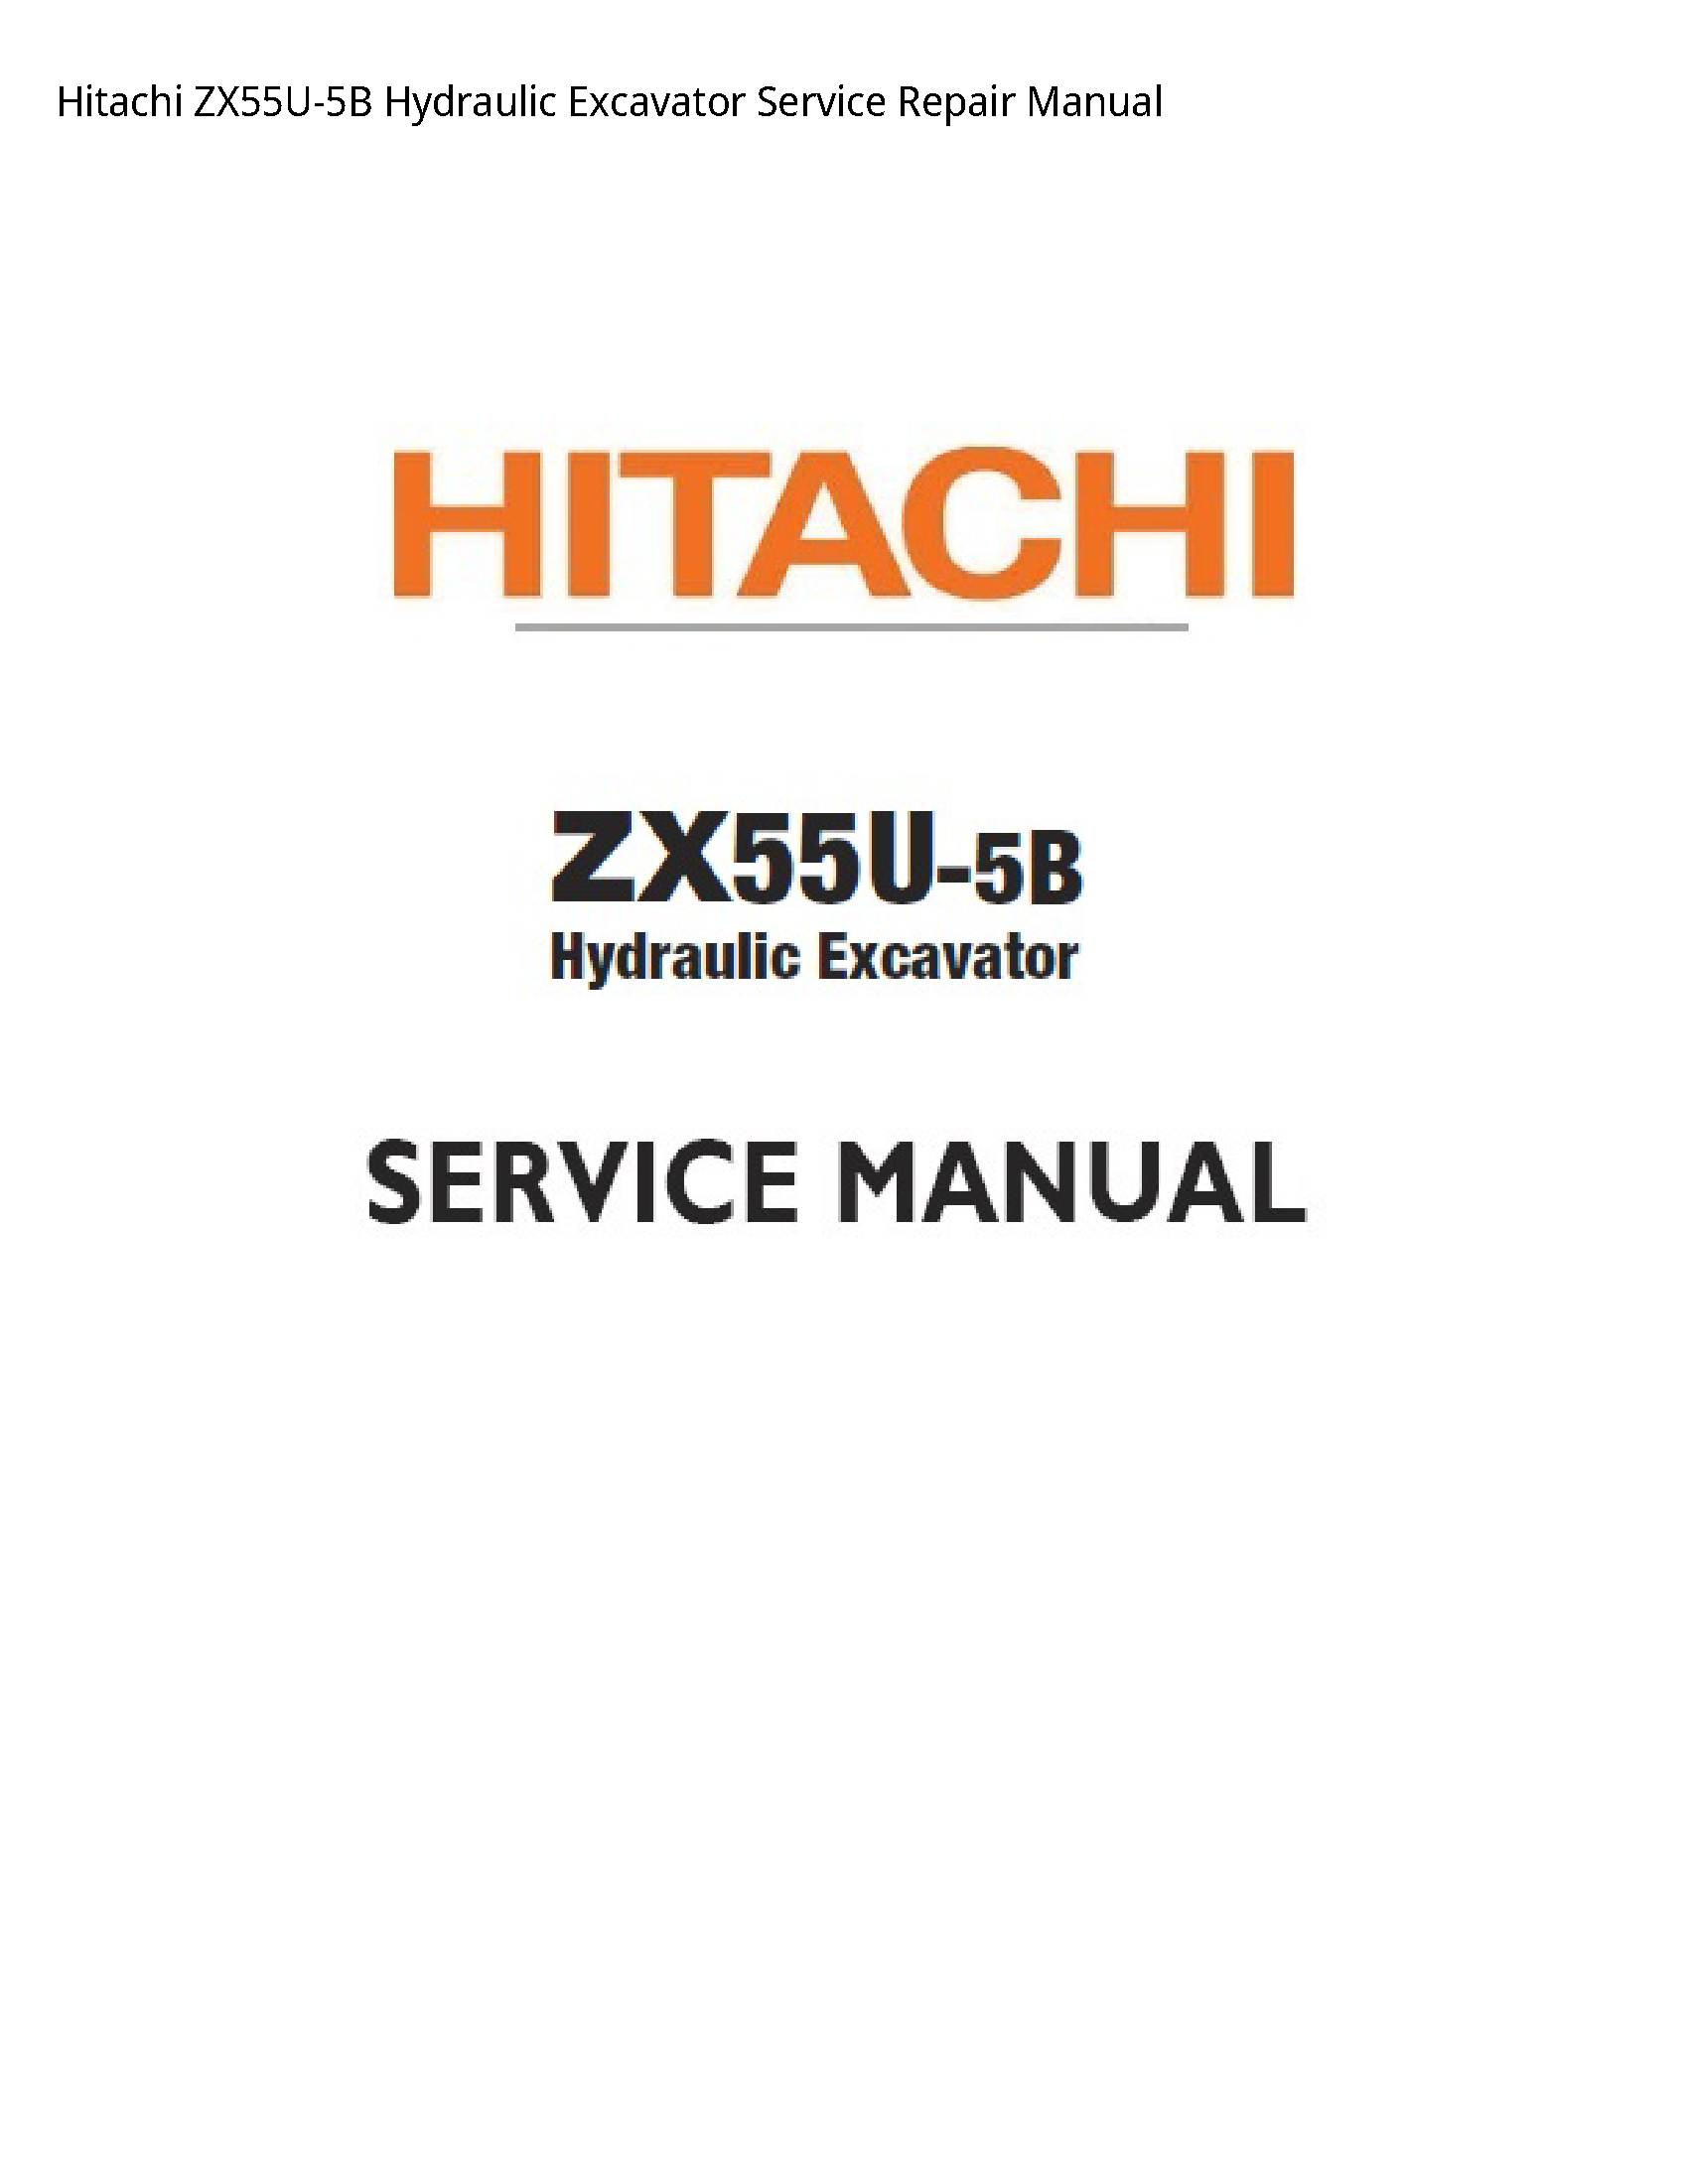 Hitachi ZX55U-5B Hydraulic Excavator manual